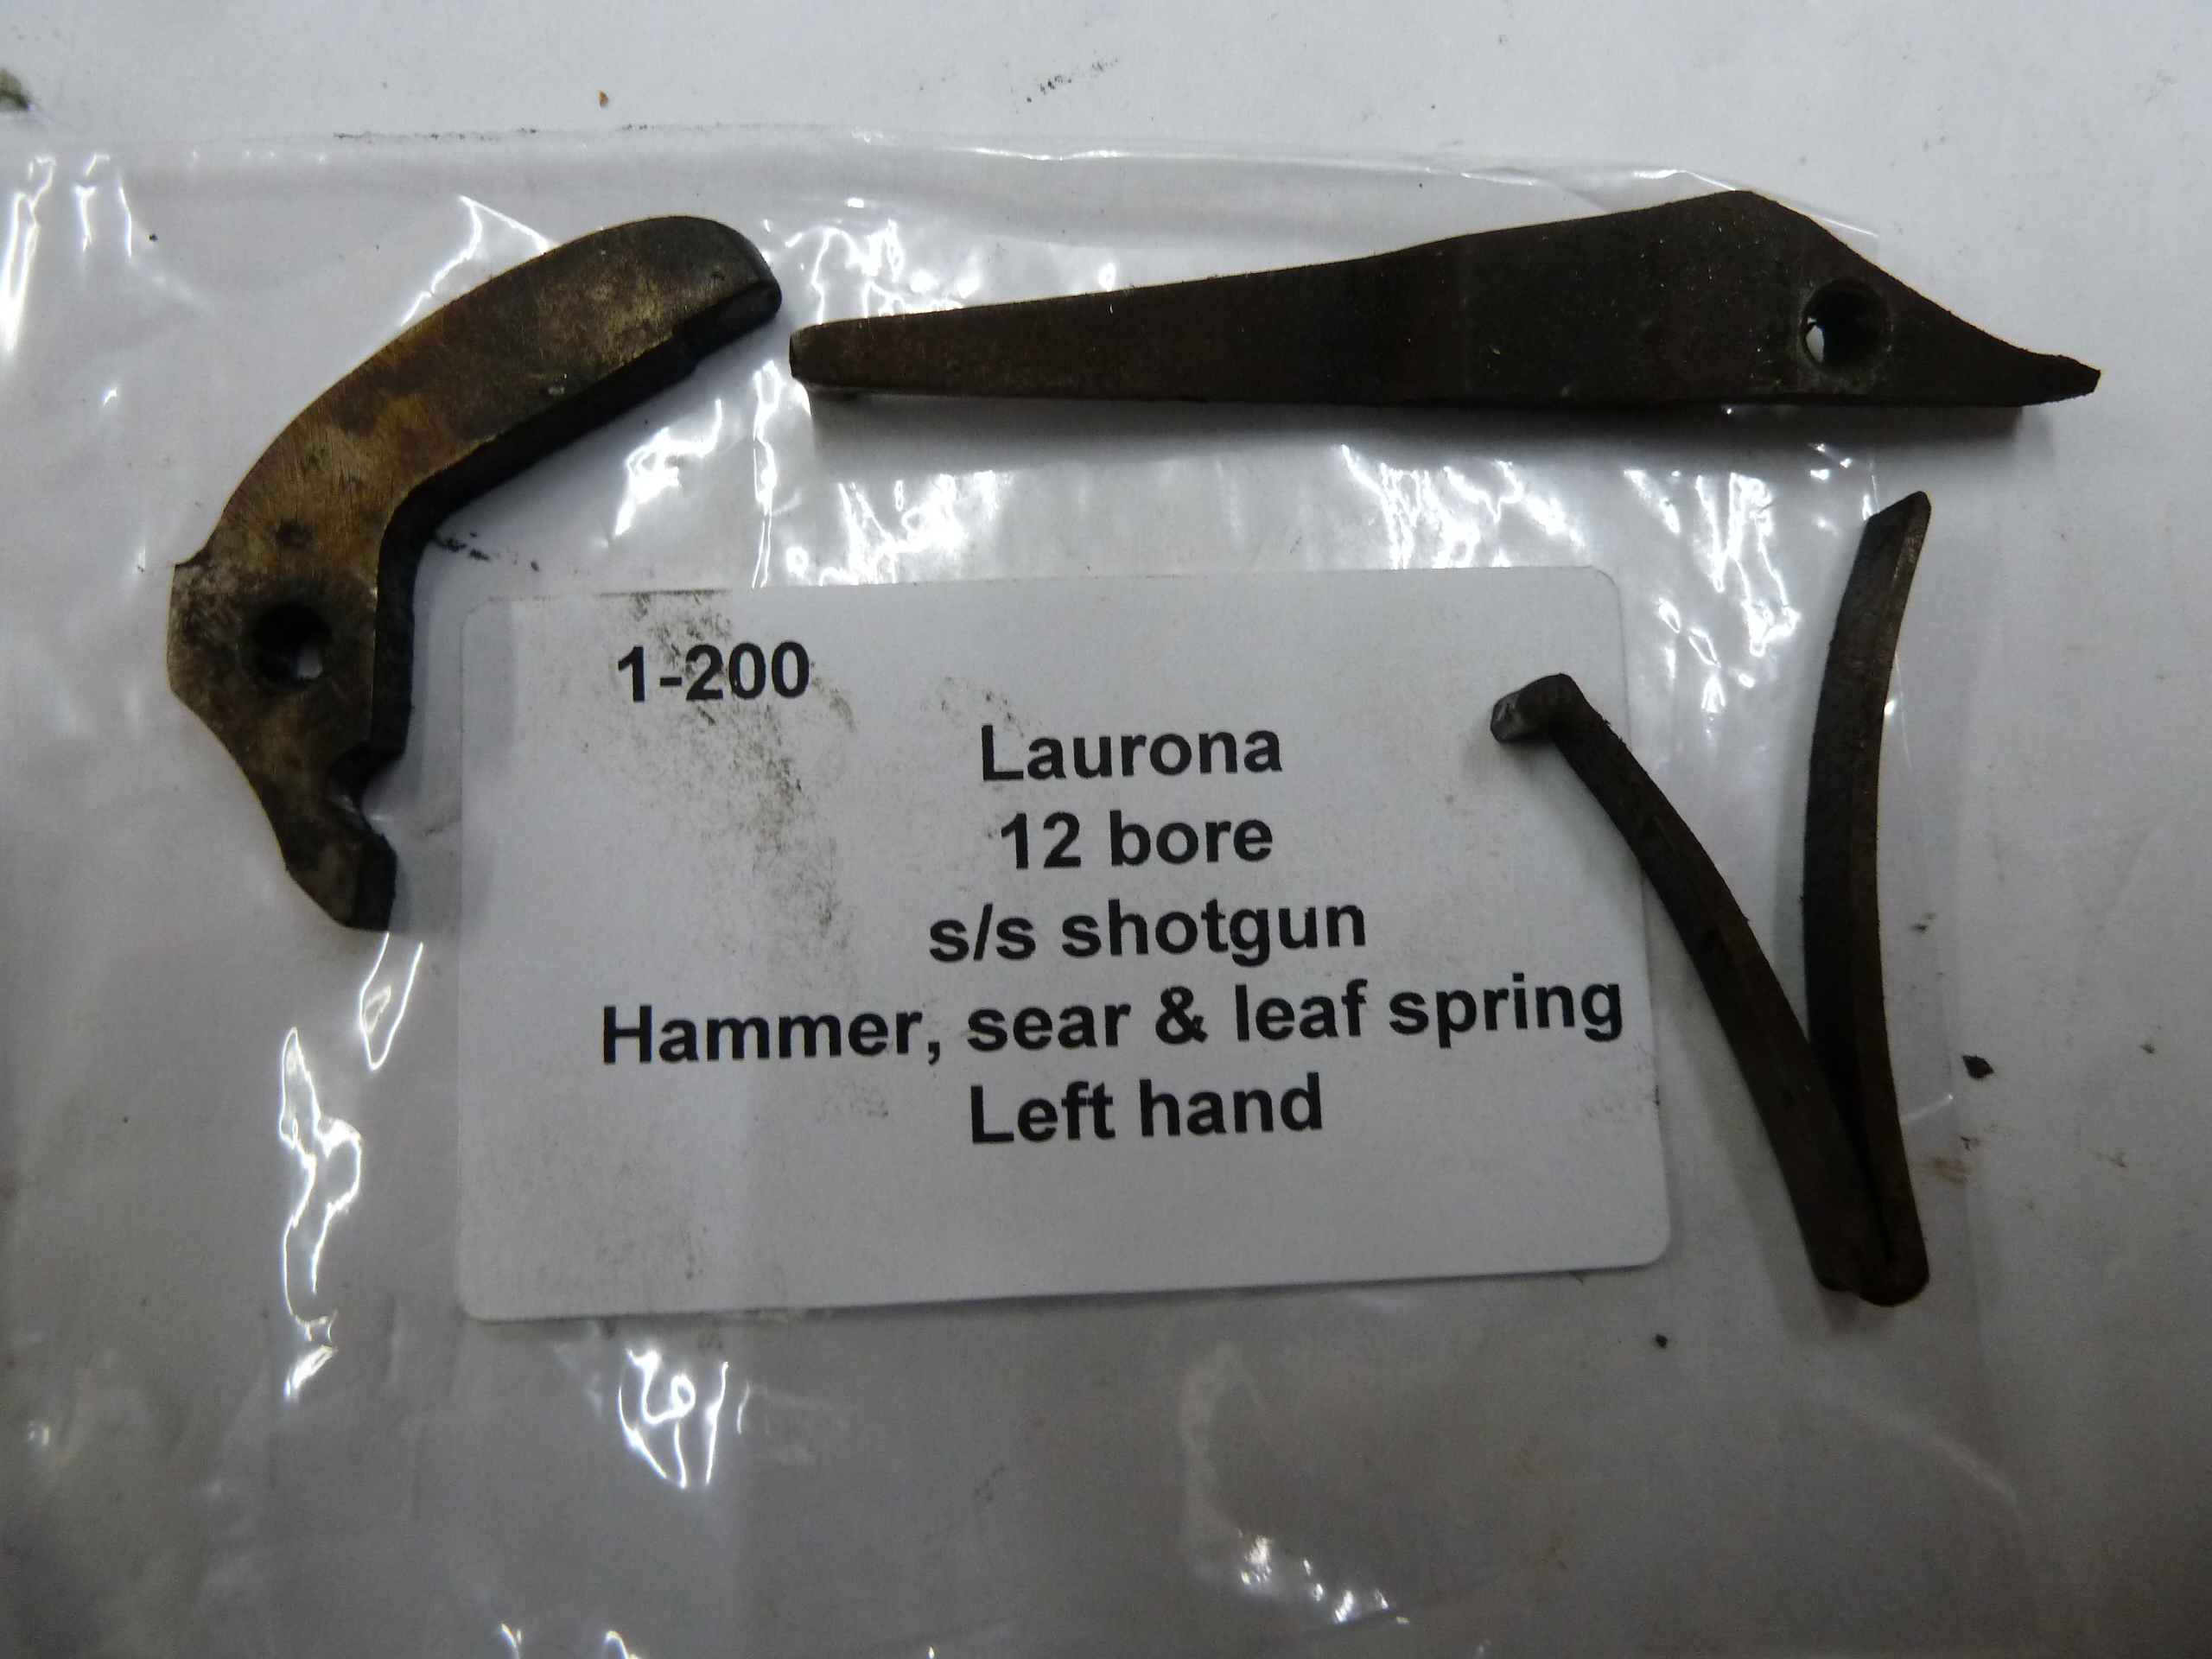 Laurona hammer sear and leaf spring